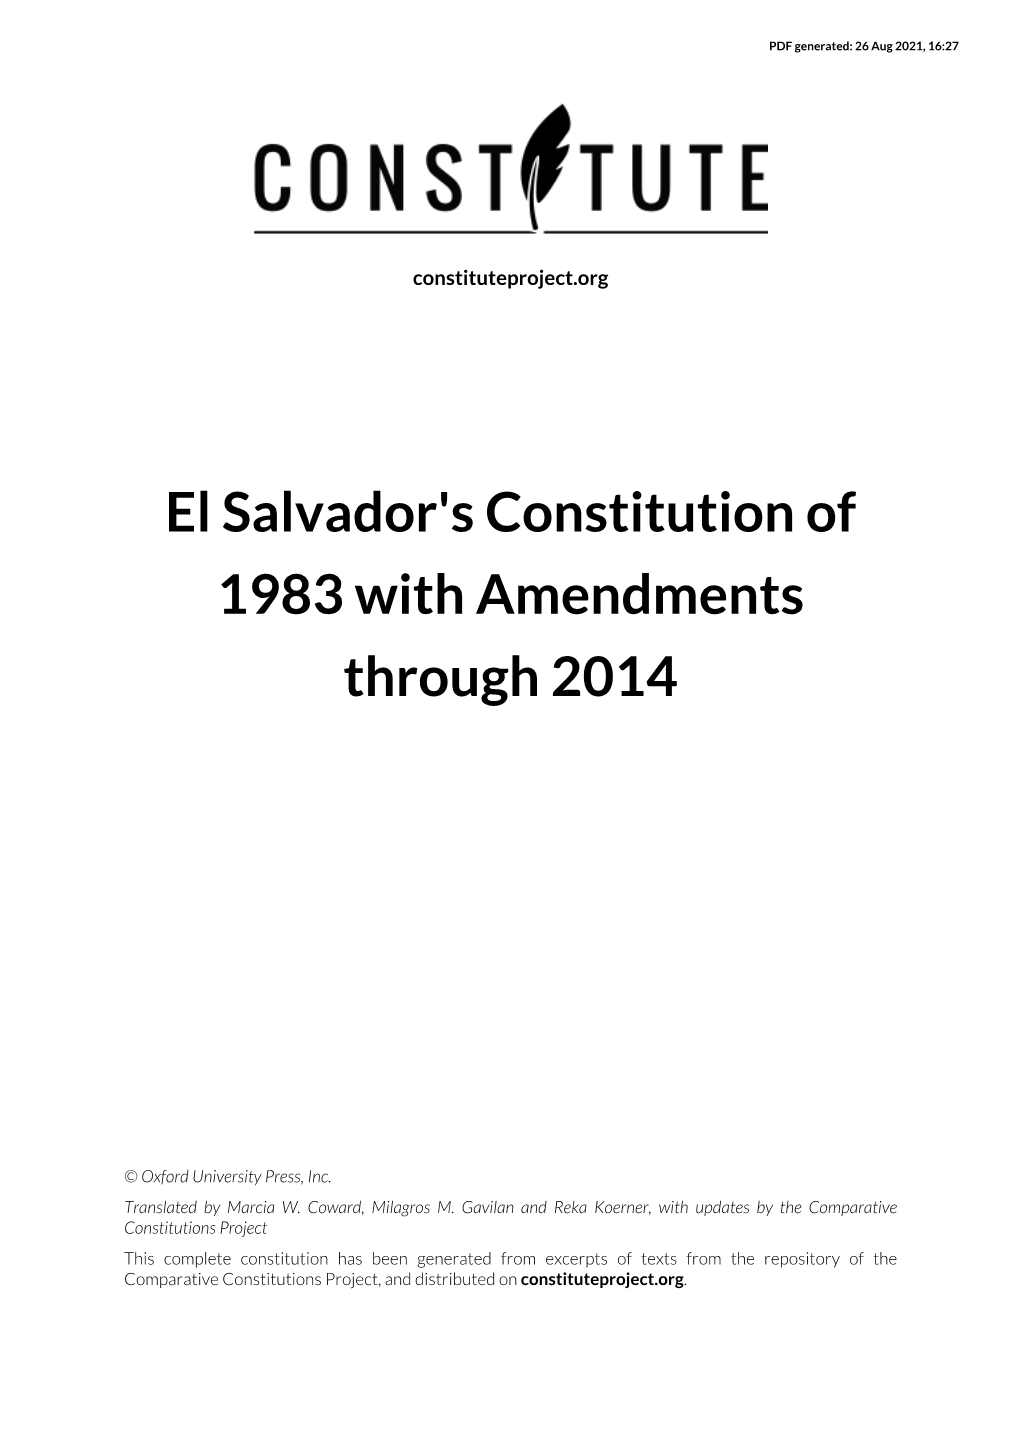 El Salvador's Constitution of 1983 with Amendments Through 2014